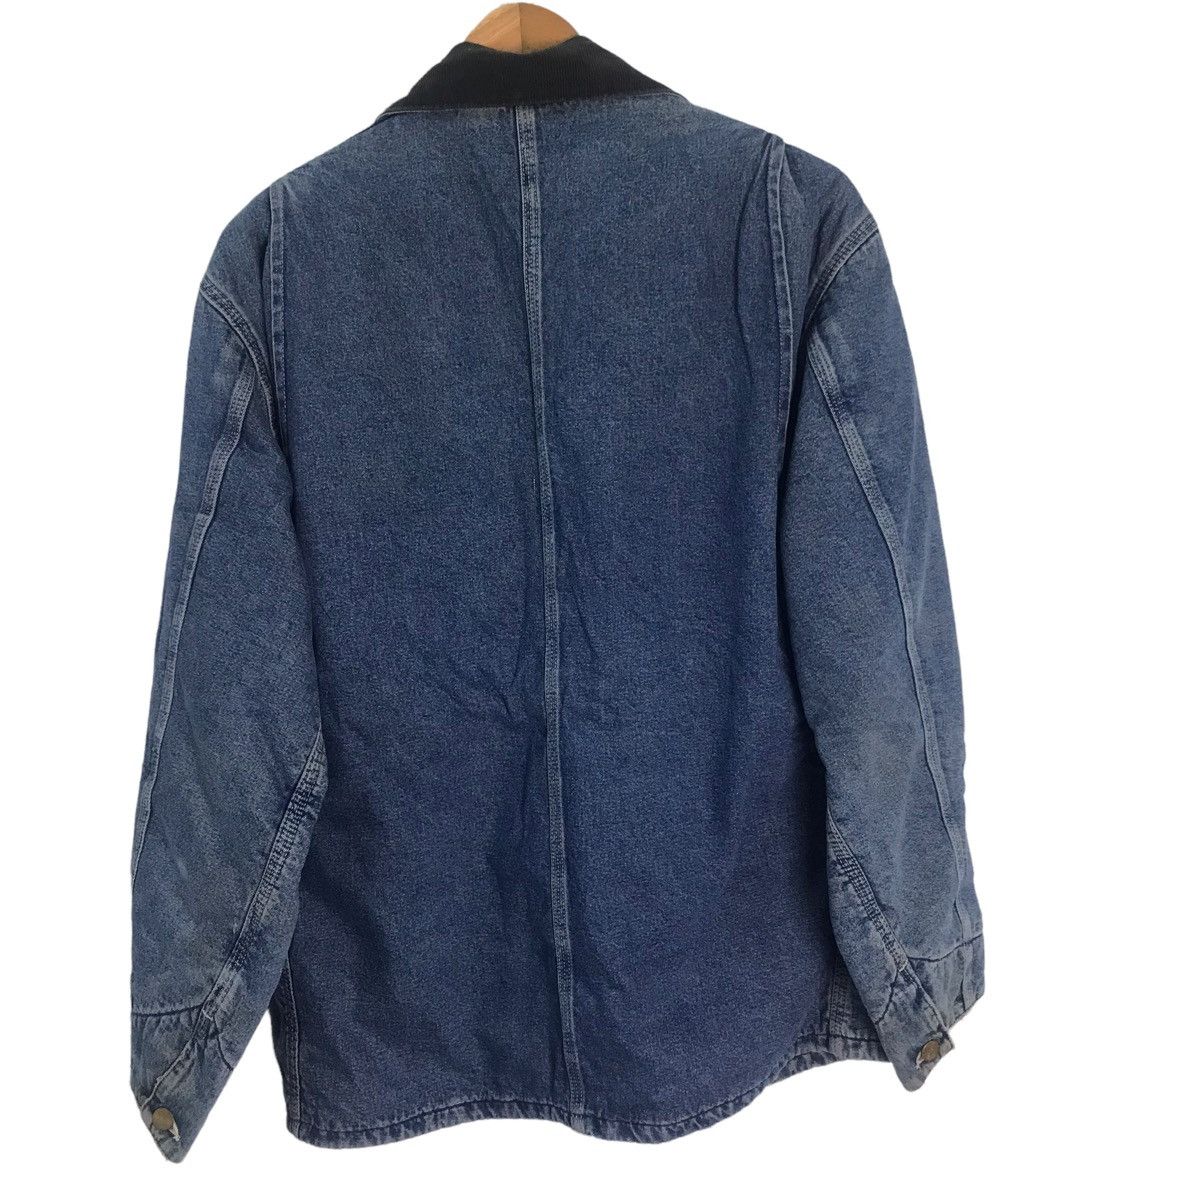 Vintage carhatt denim blanket coverall jacket - 3